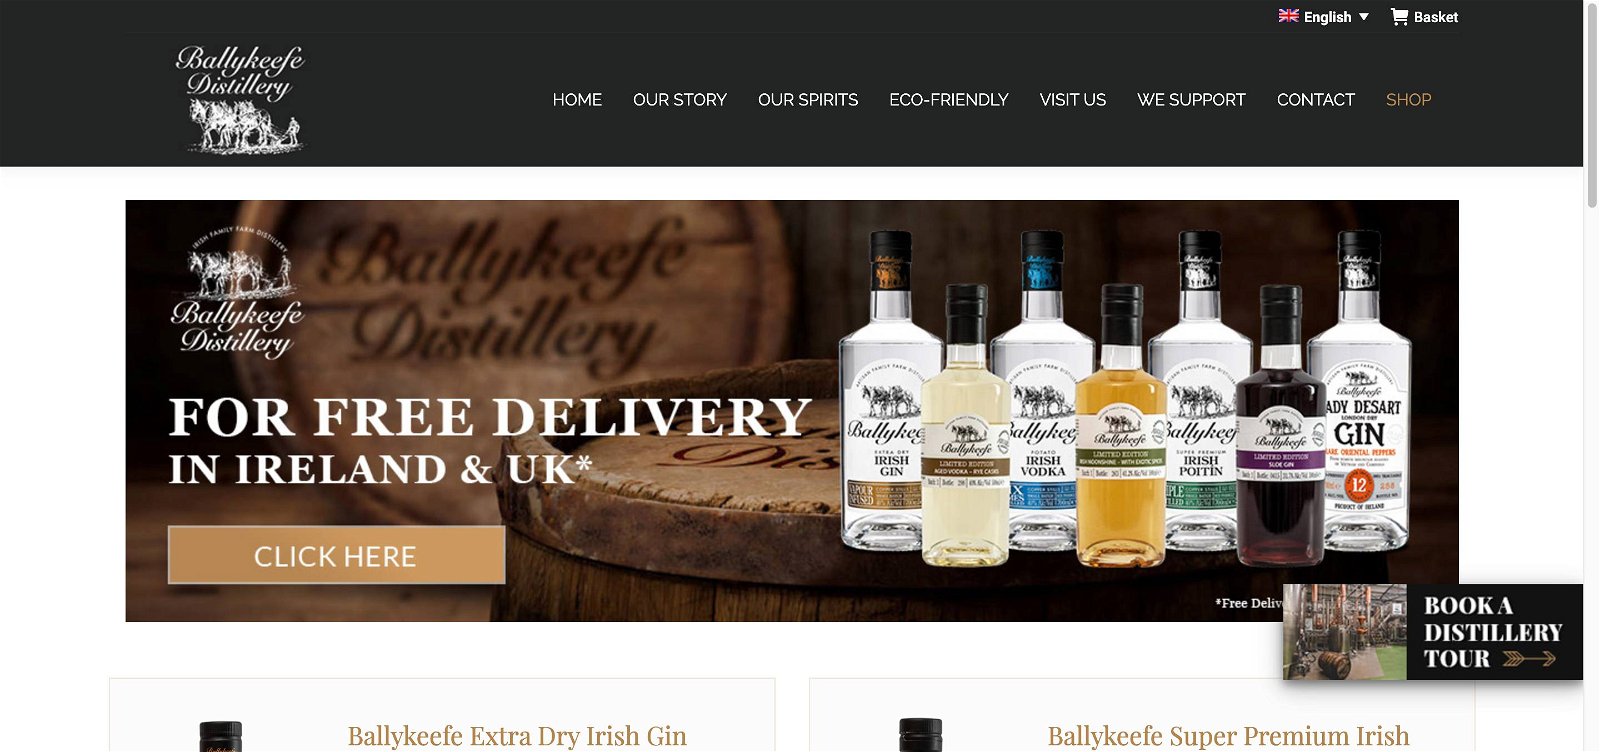 Ballykeefe distillery.ie